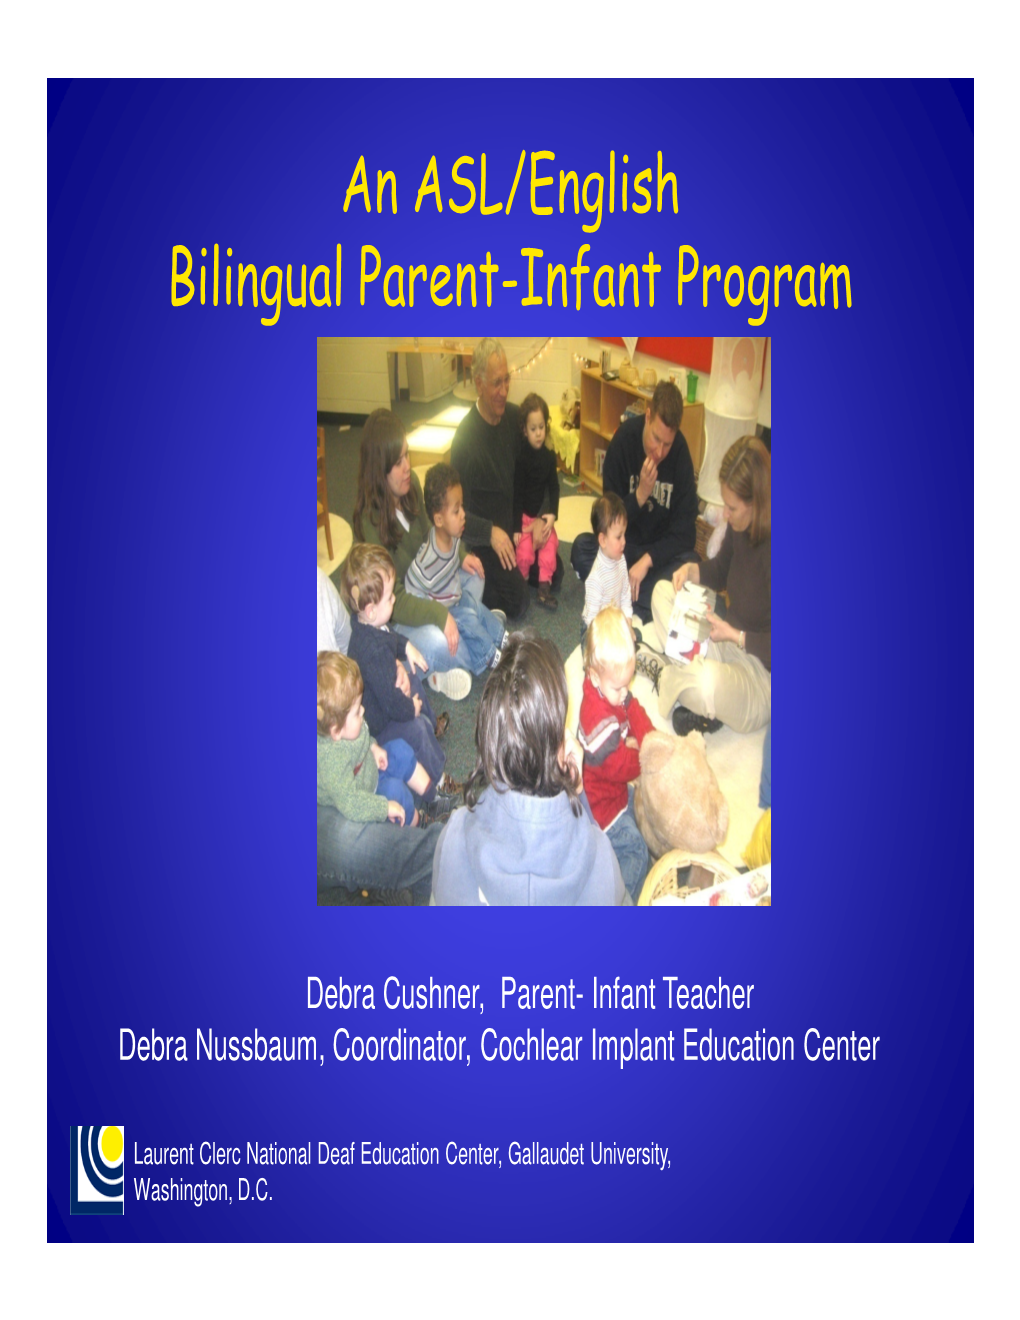 An ASL/English Bilingual Parent-Infant Program